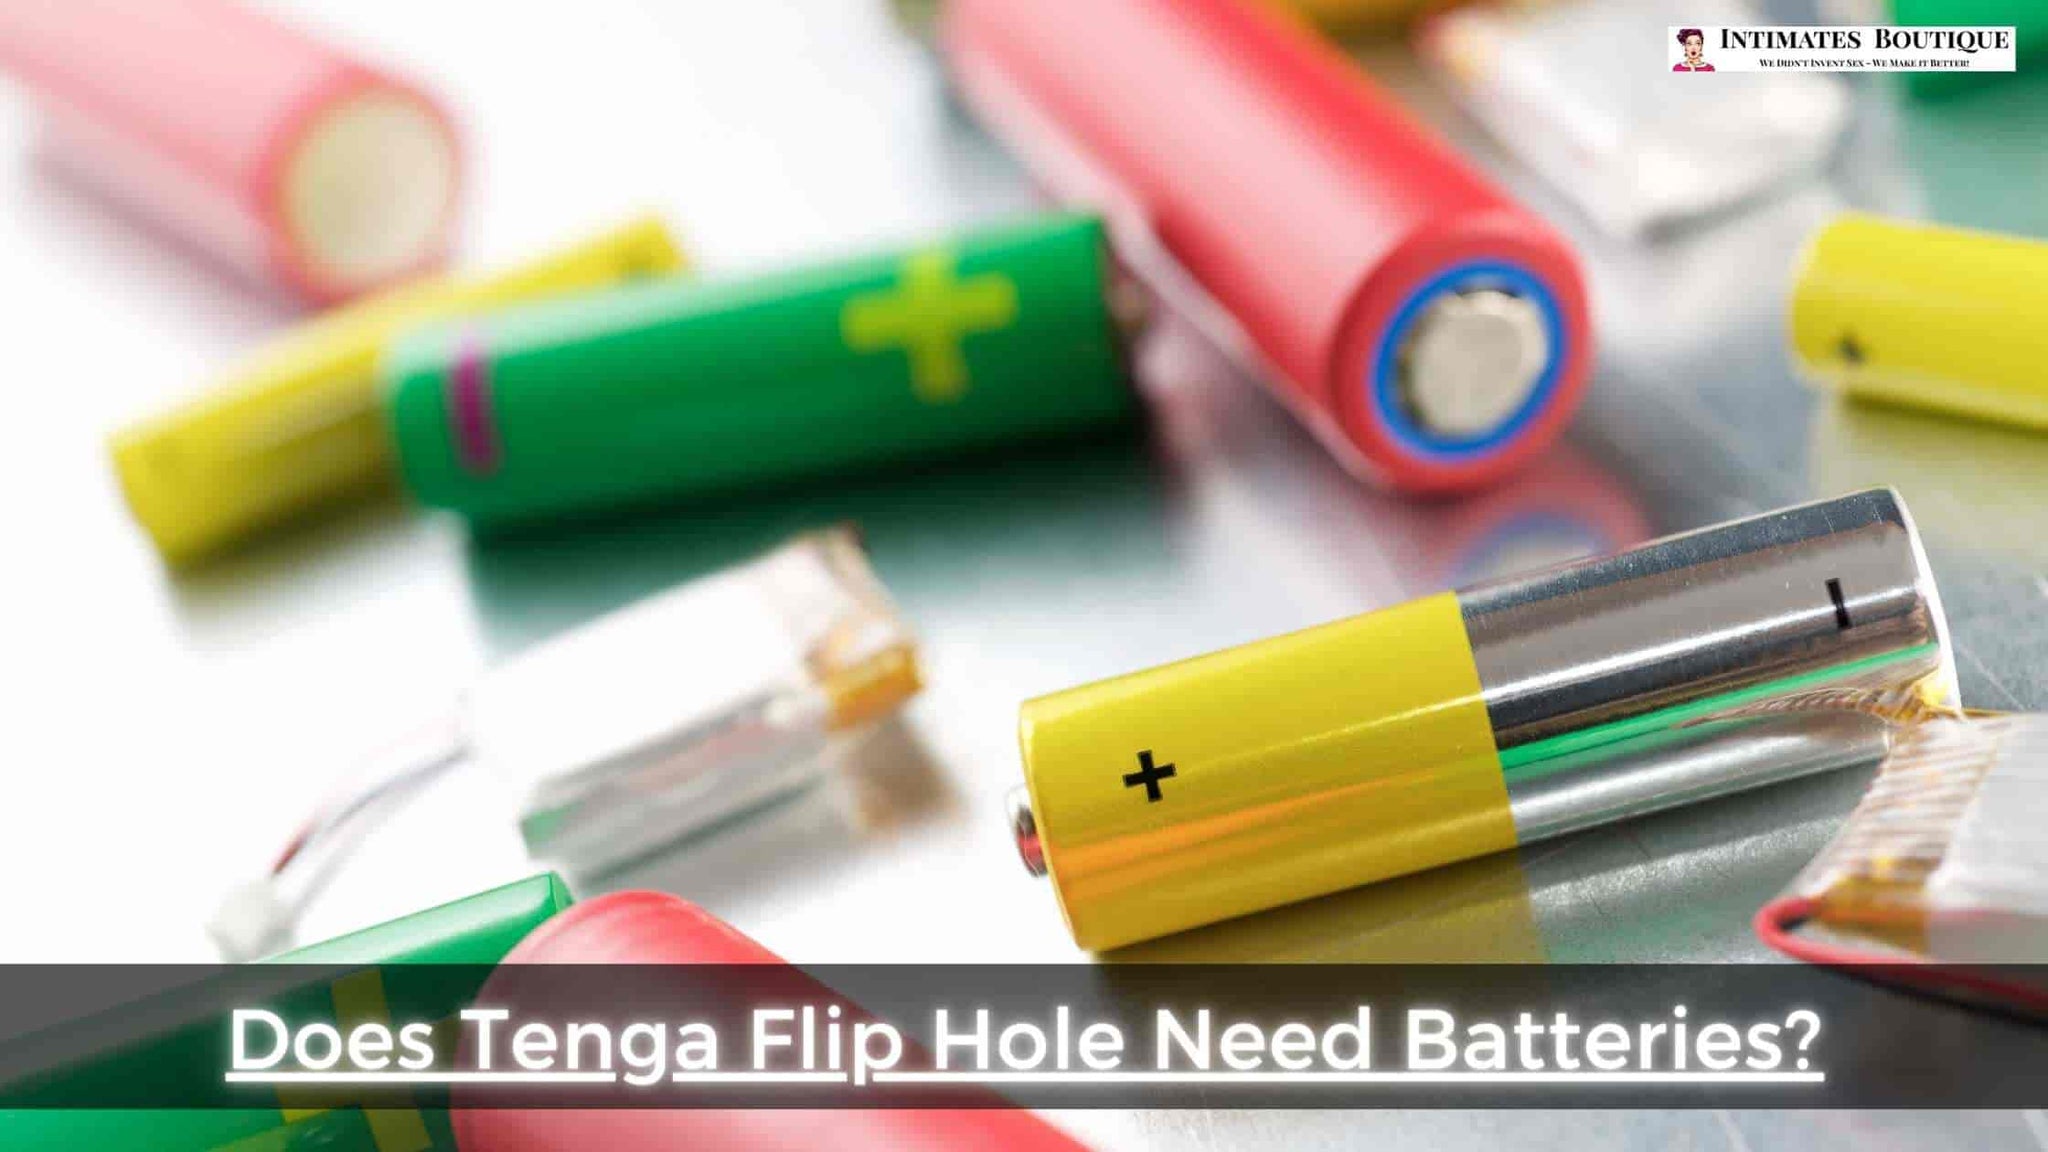 Does Tenga Flip Hole Need Batteries?